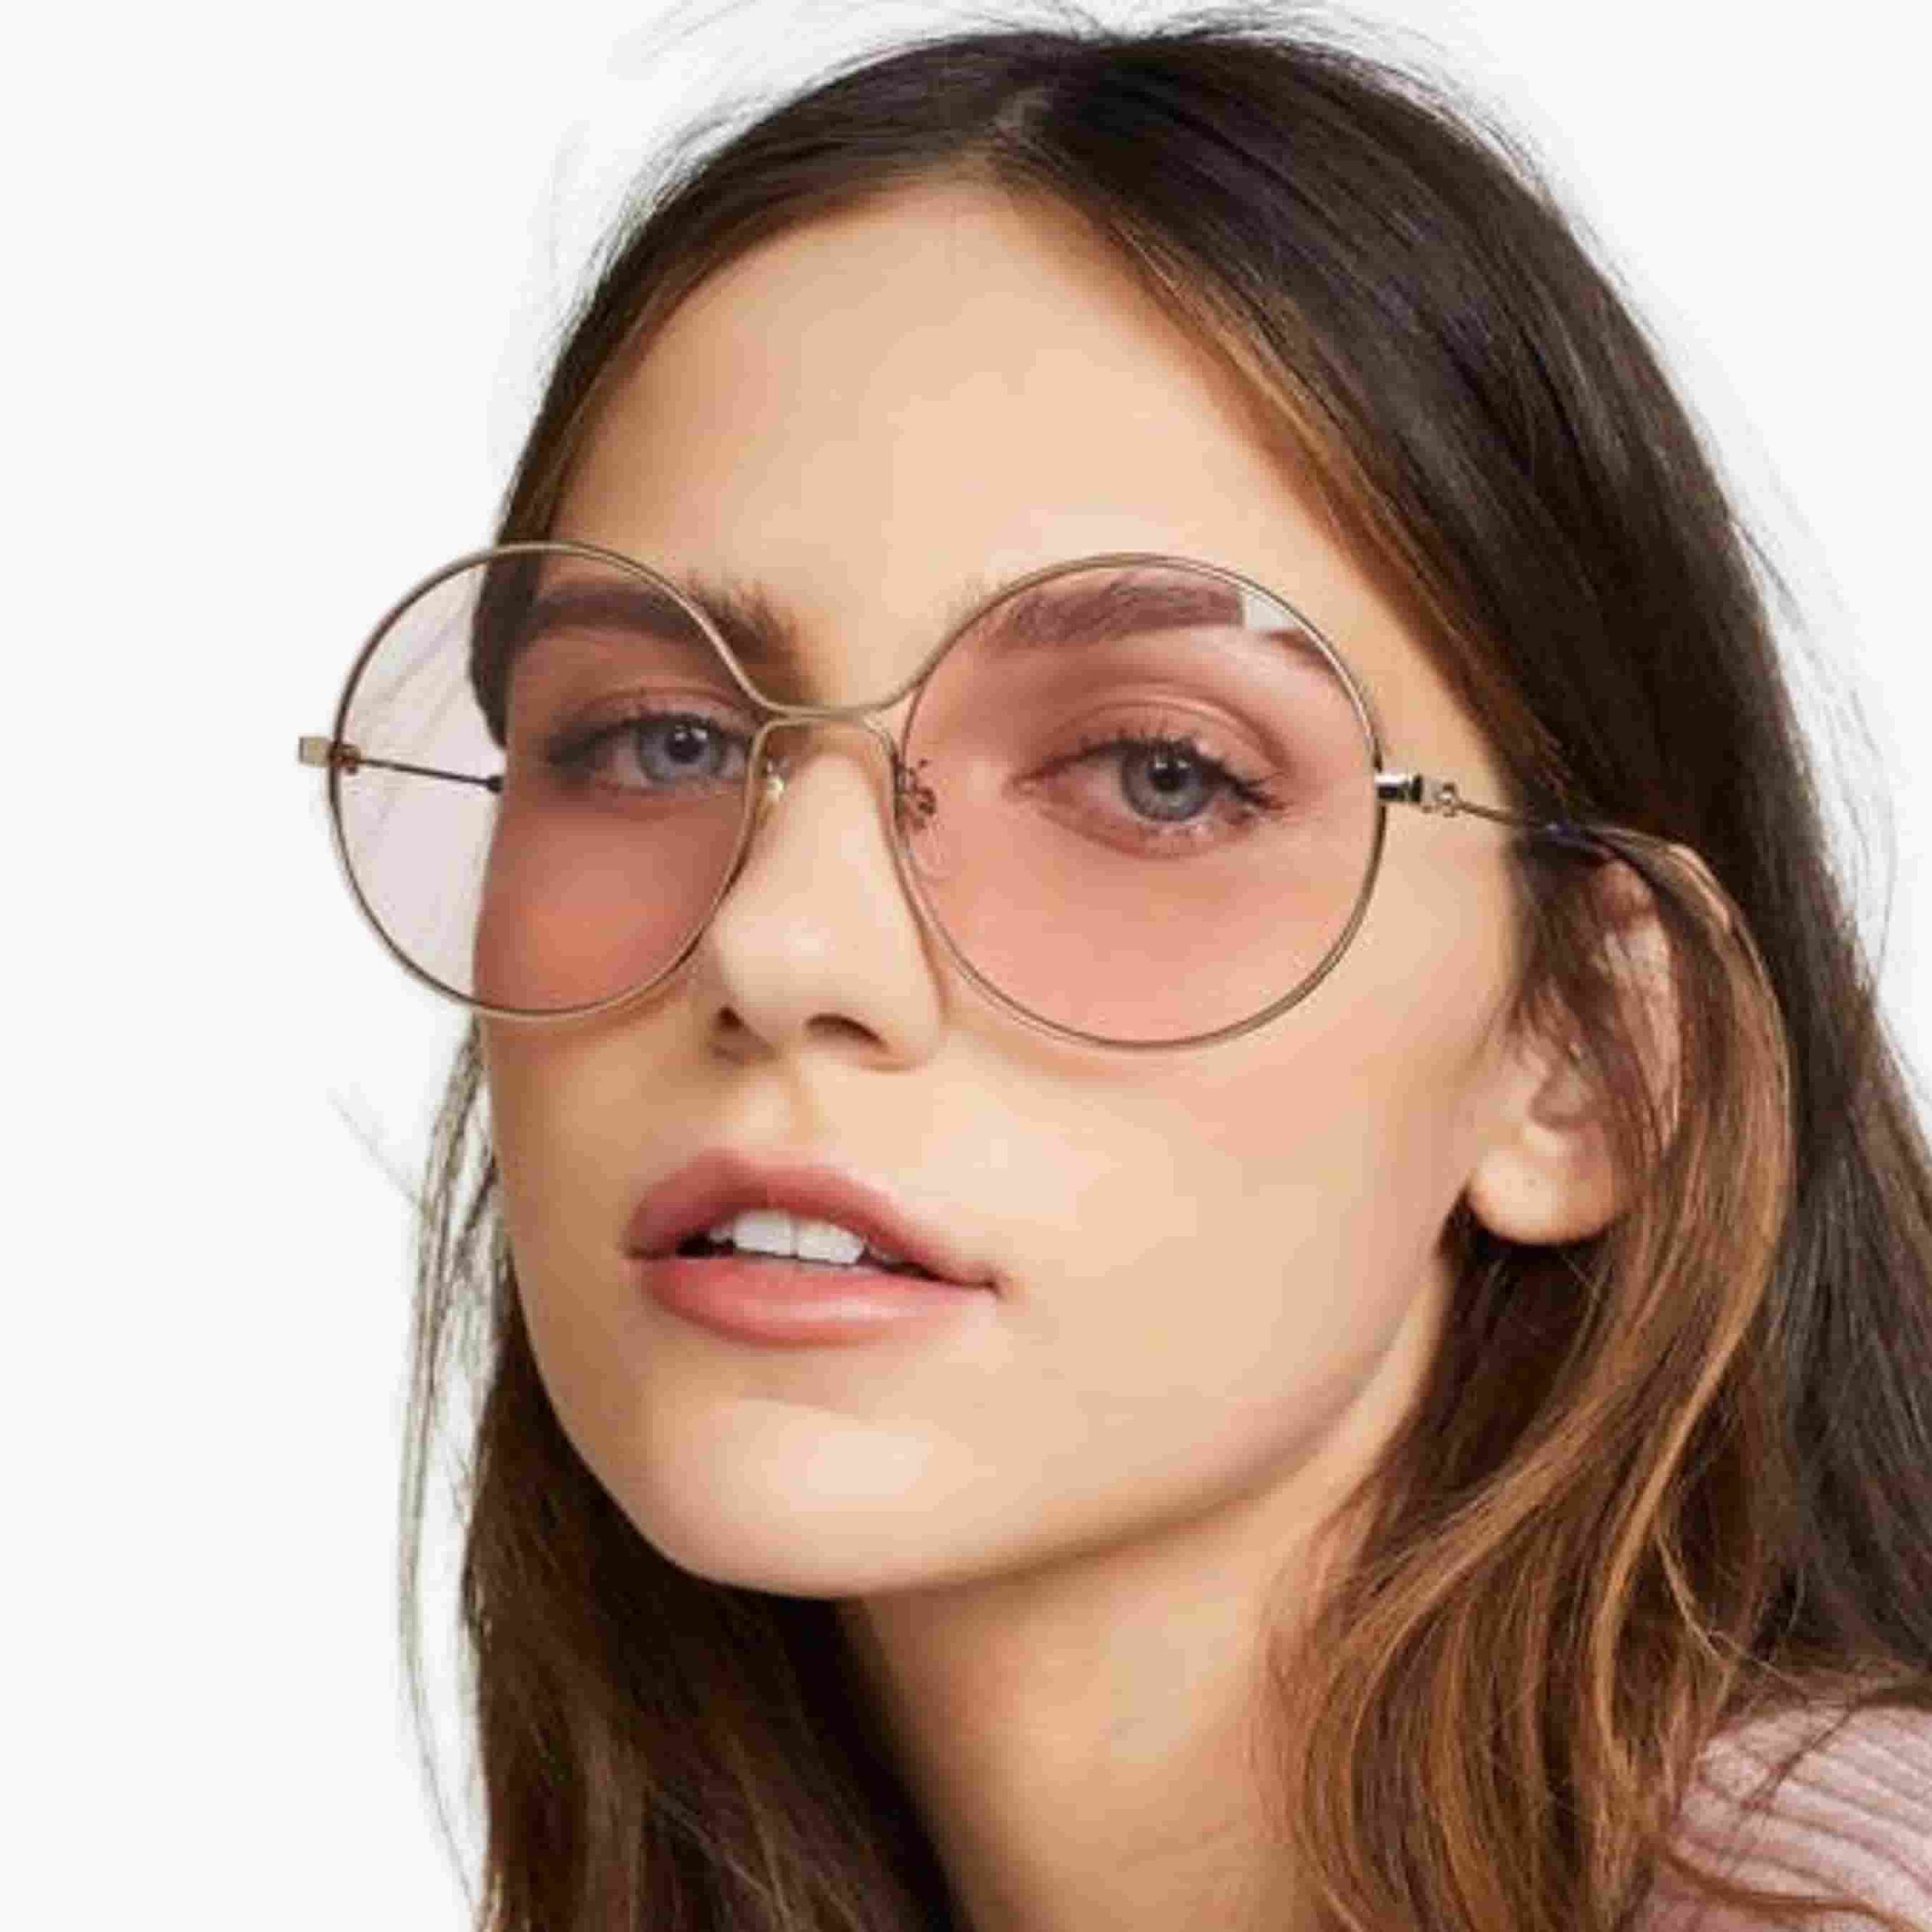 Buy Now Women's Trending Eyewear 100% Authentic Branded Eyeglasses and Sunglasses at Mittal Optics